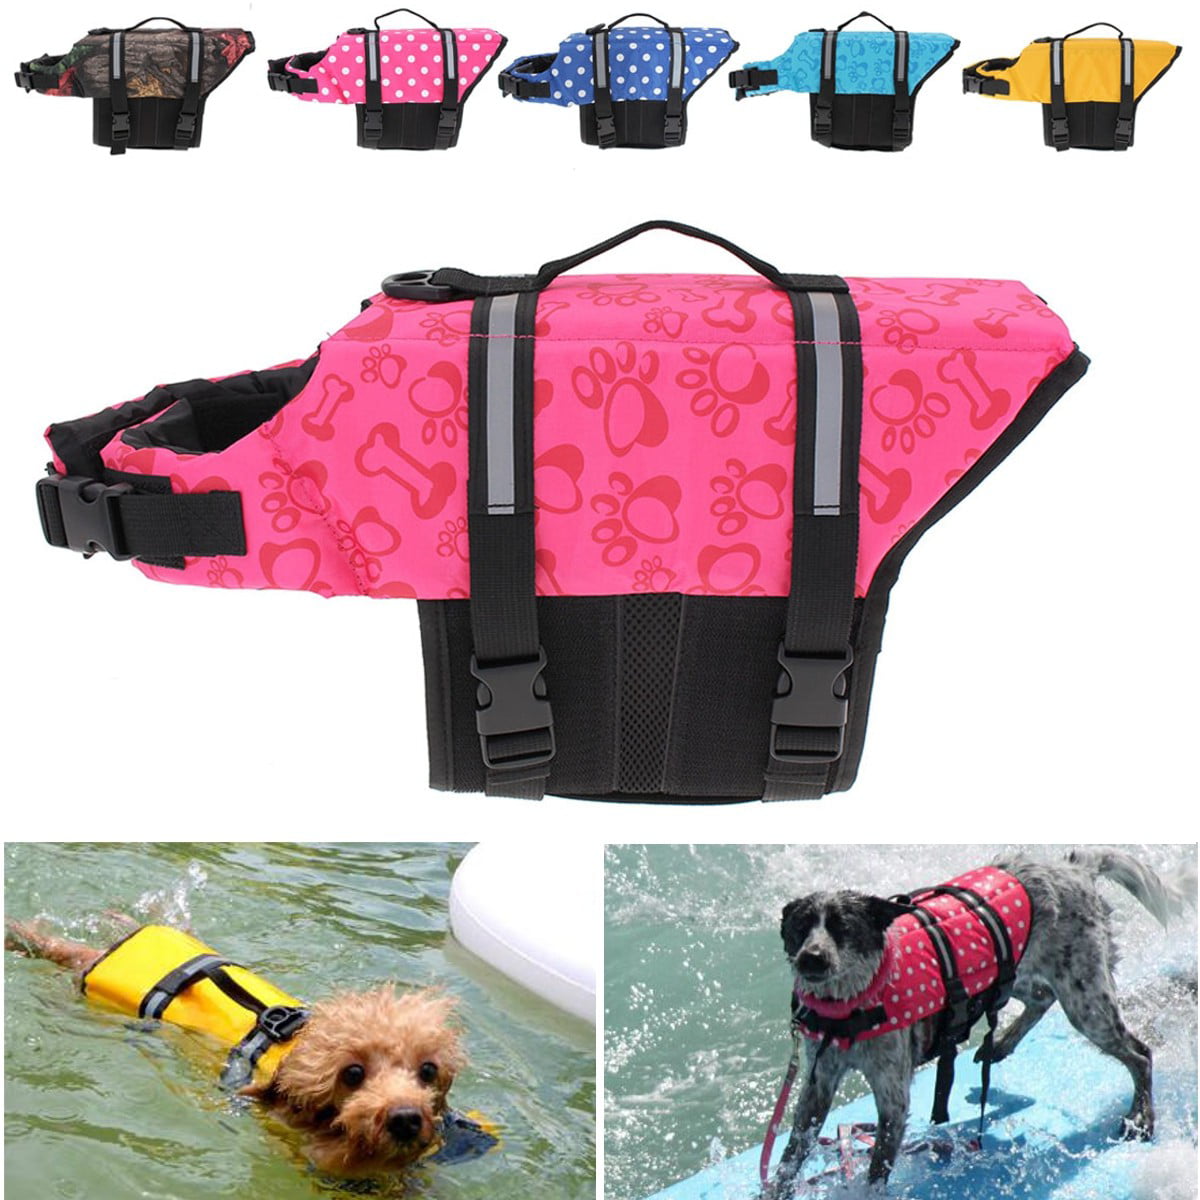 Dog Life Jacket Buoyancy Aid Pet Safety Swimming Boating Adjustable Vest Suit UK 